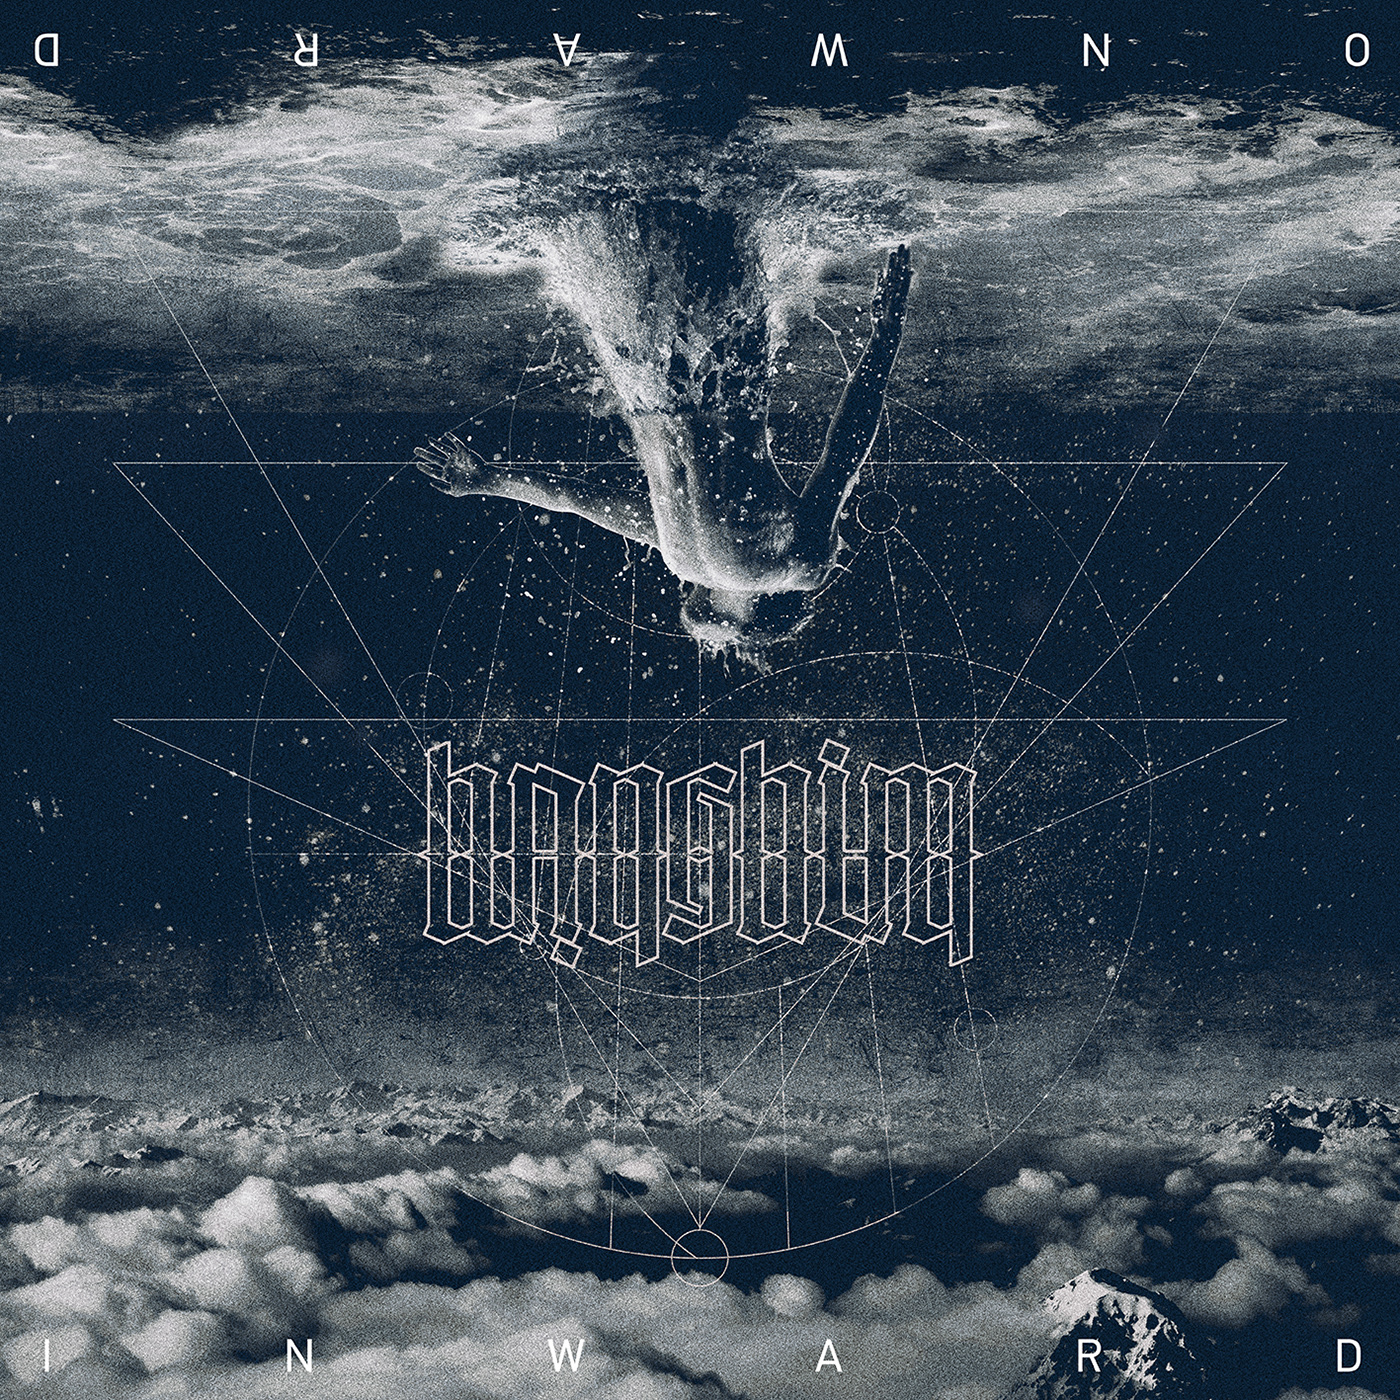 Hang Him  Death Metal  metal  cover  album  Album cover  ambigram  typography  Astronomy  stars  anatomy  Calin raduta